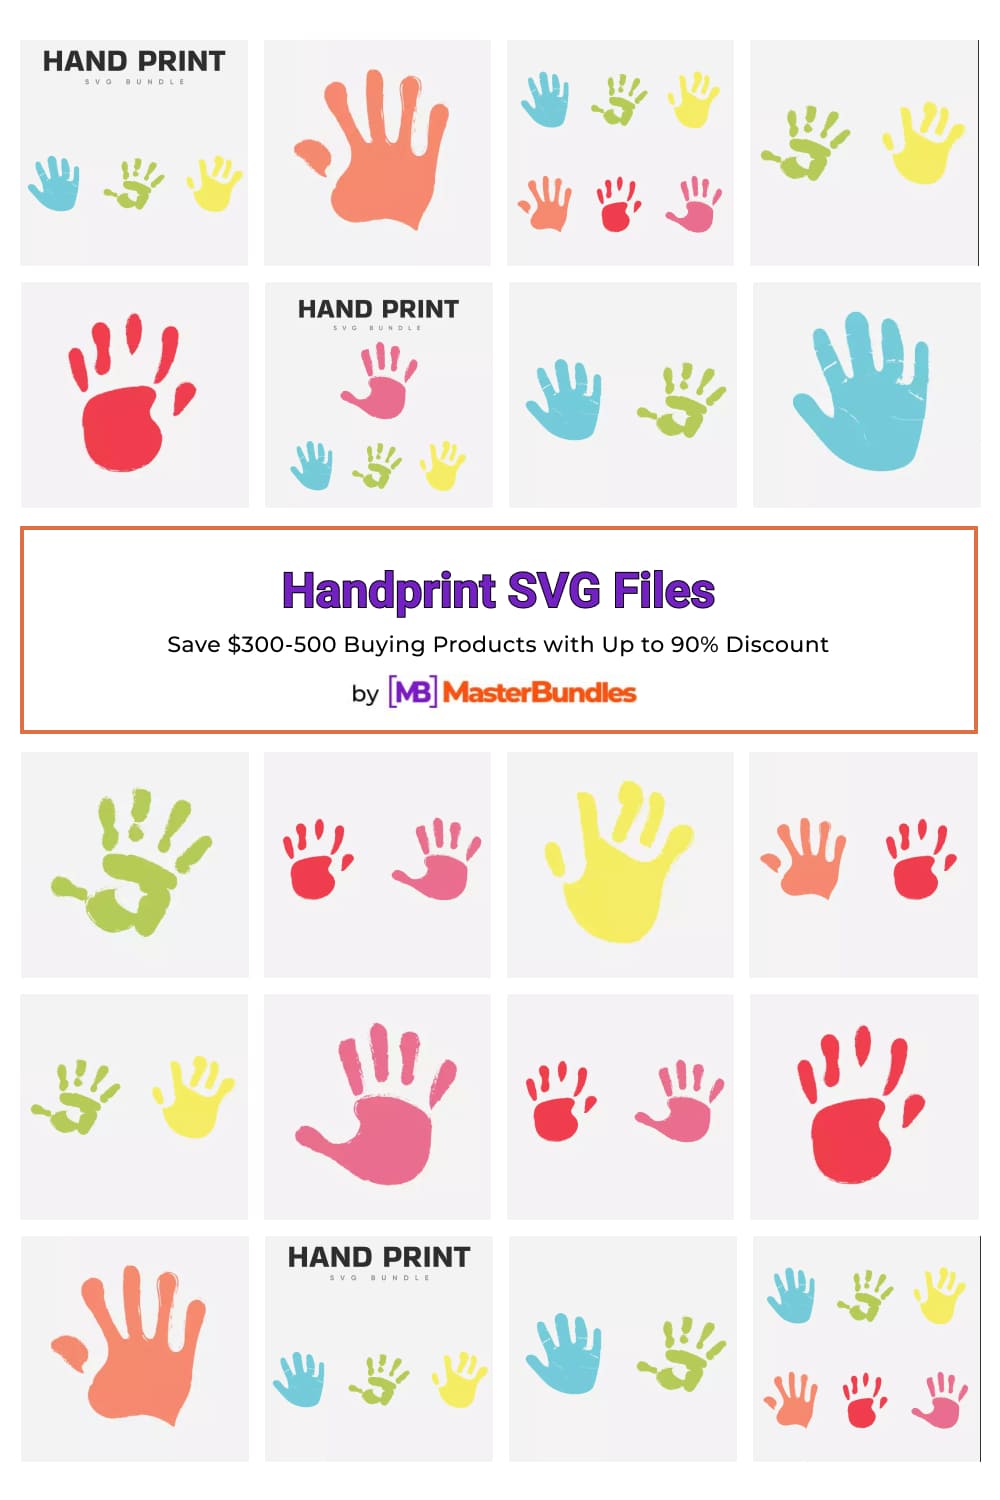 Handprint SVG Files Pinterest image.